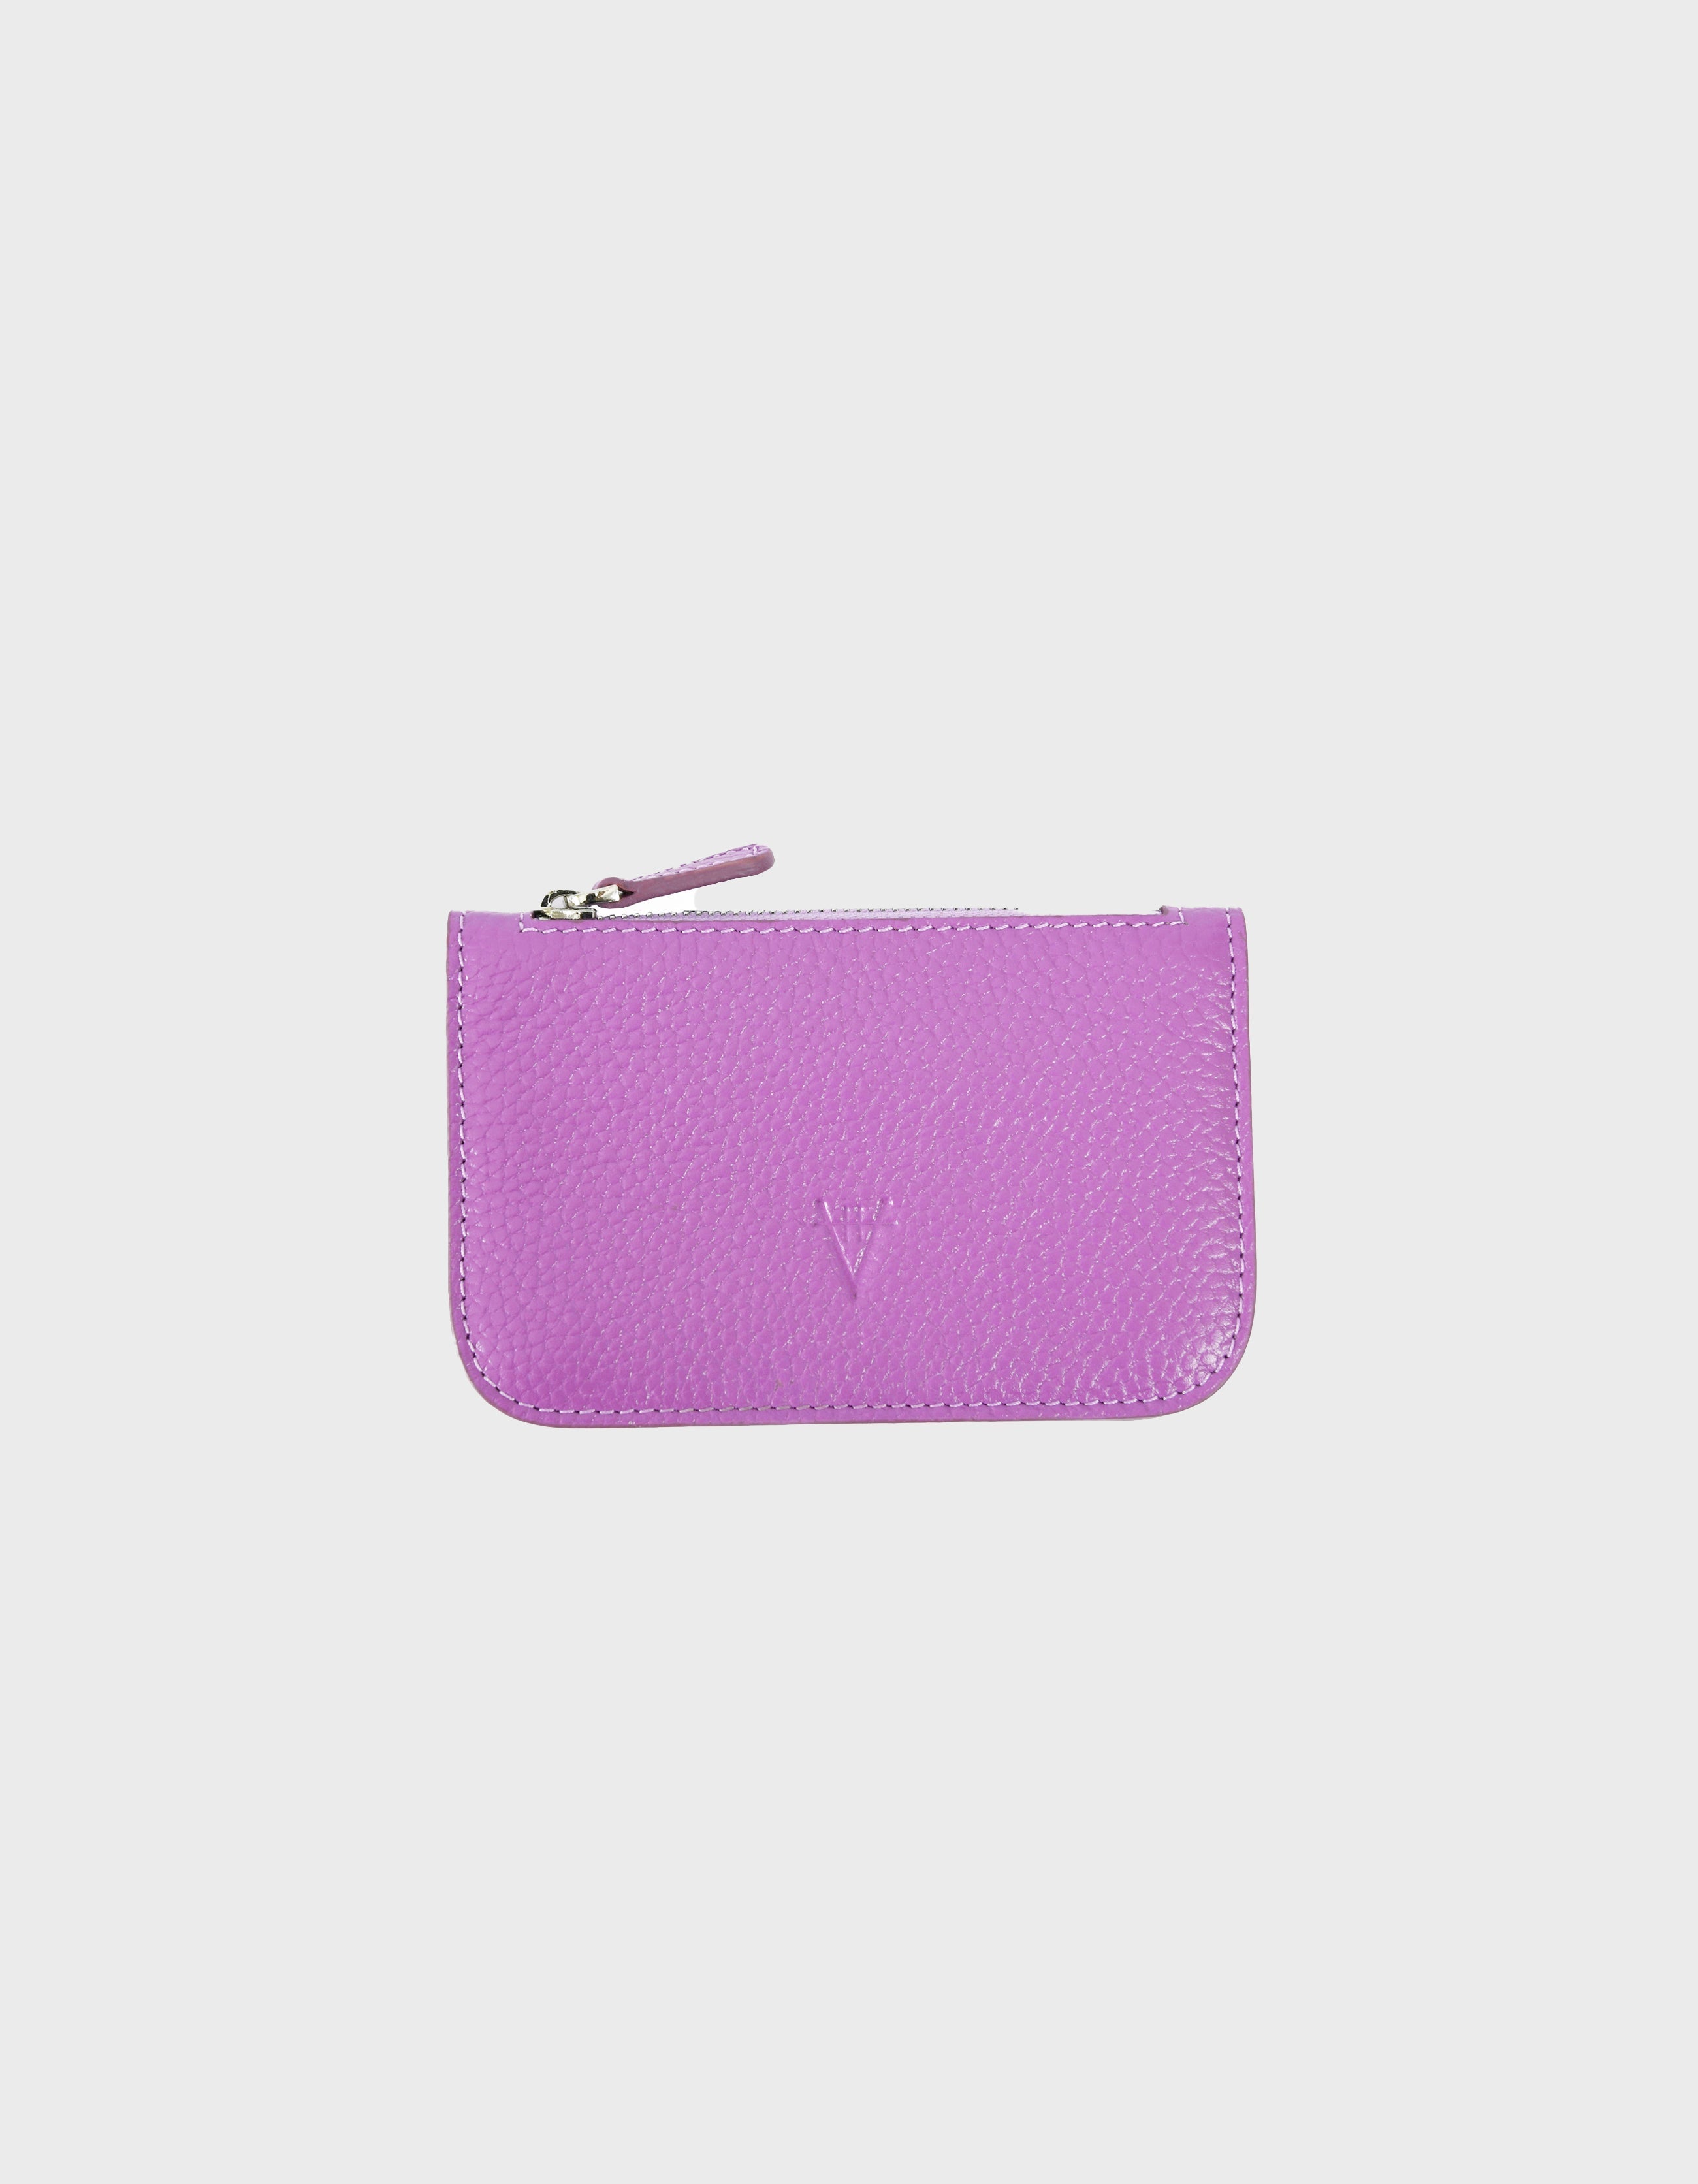 Hiva Atelier | Alae Coin Purse & Card Holder Purple | Beautiful and Versatile